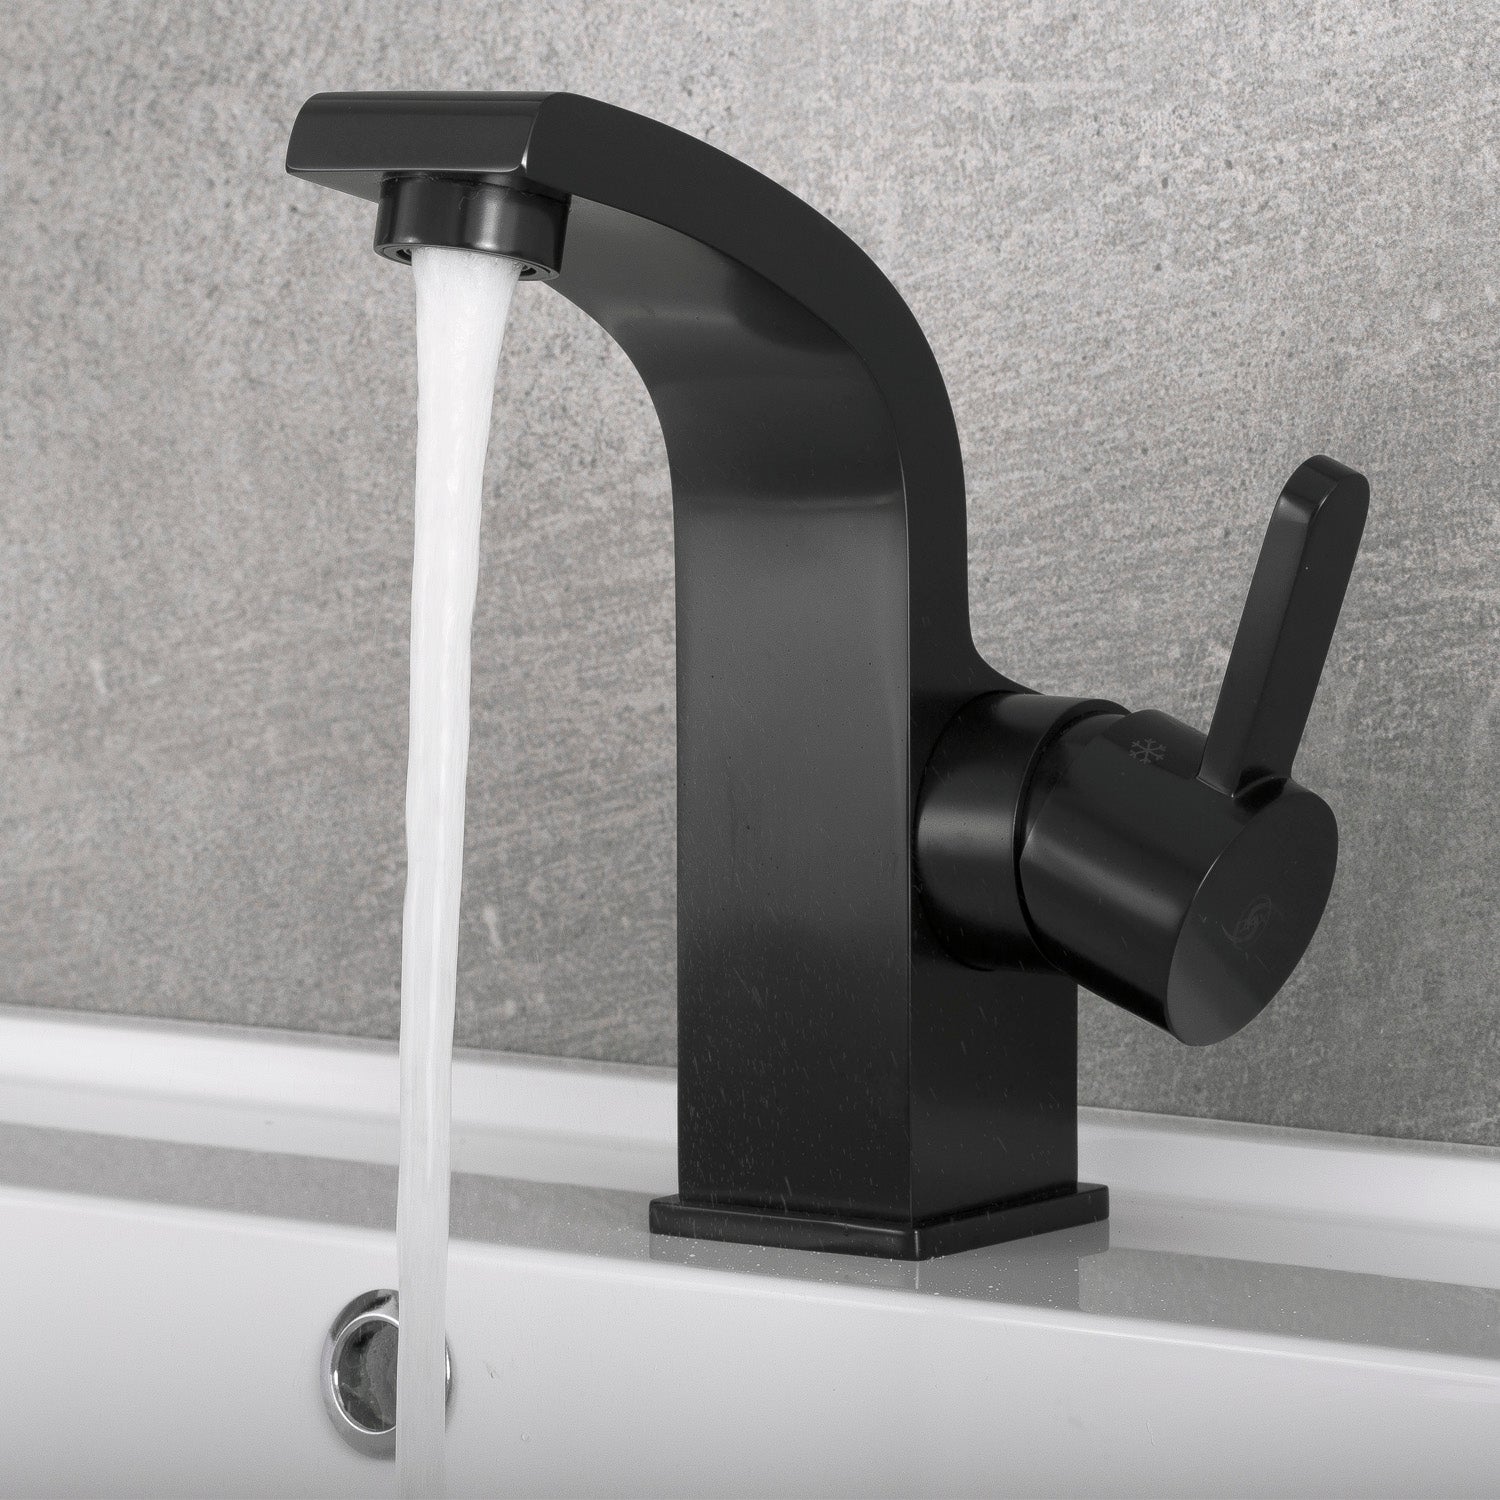 DAX Single Handle Bathroom Faucet, Brass Body, Matte Black Finish, 3-15/16 x 5-15/16 Inches (DAX-8260-BL)